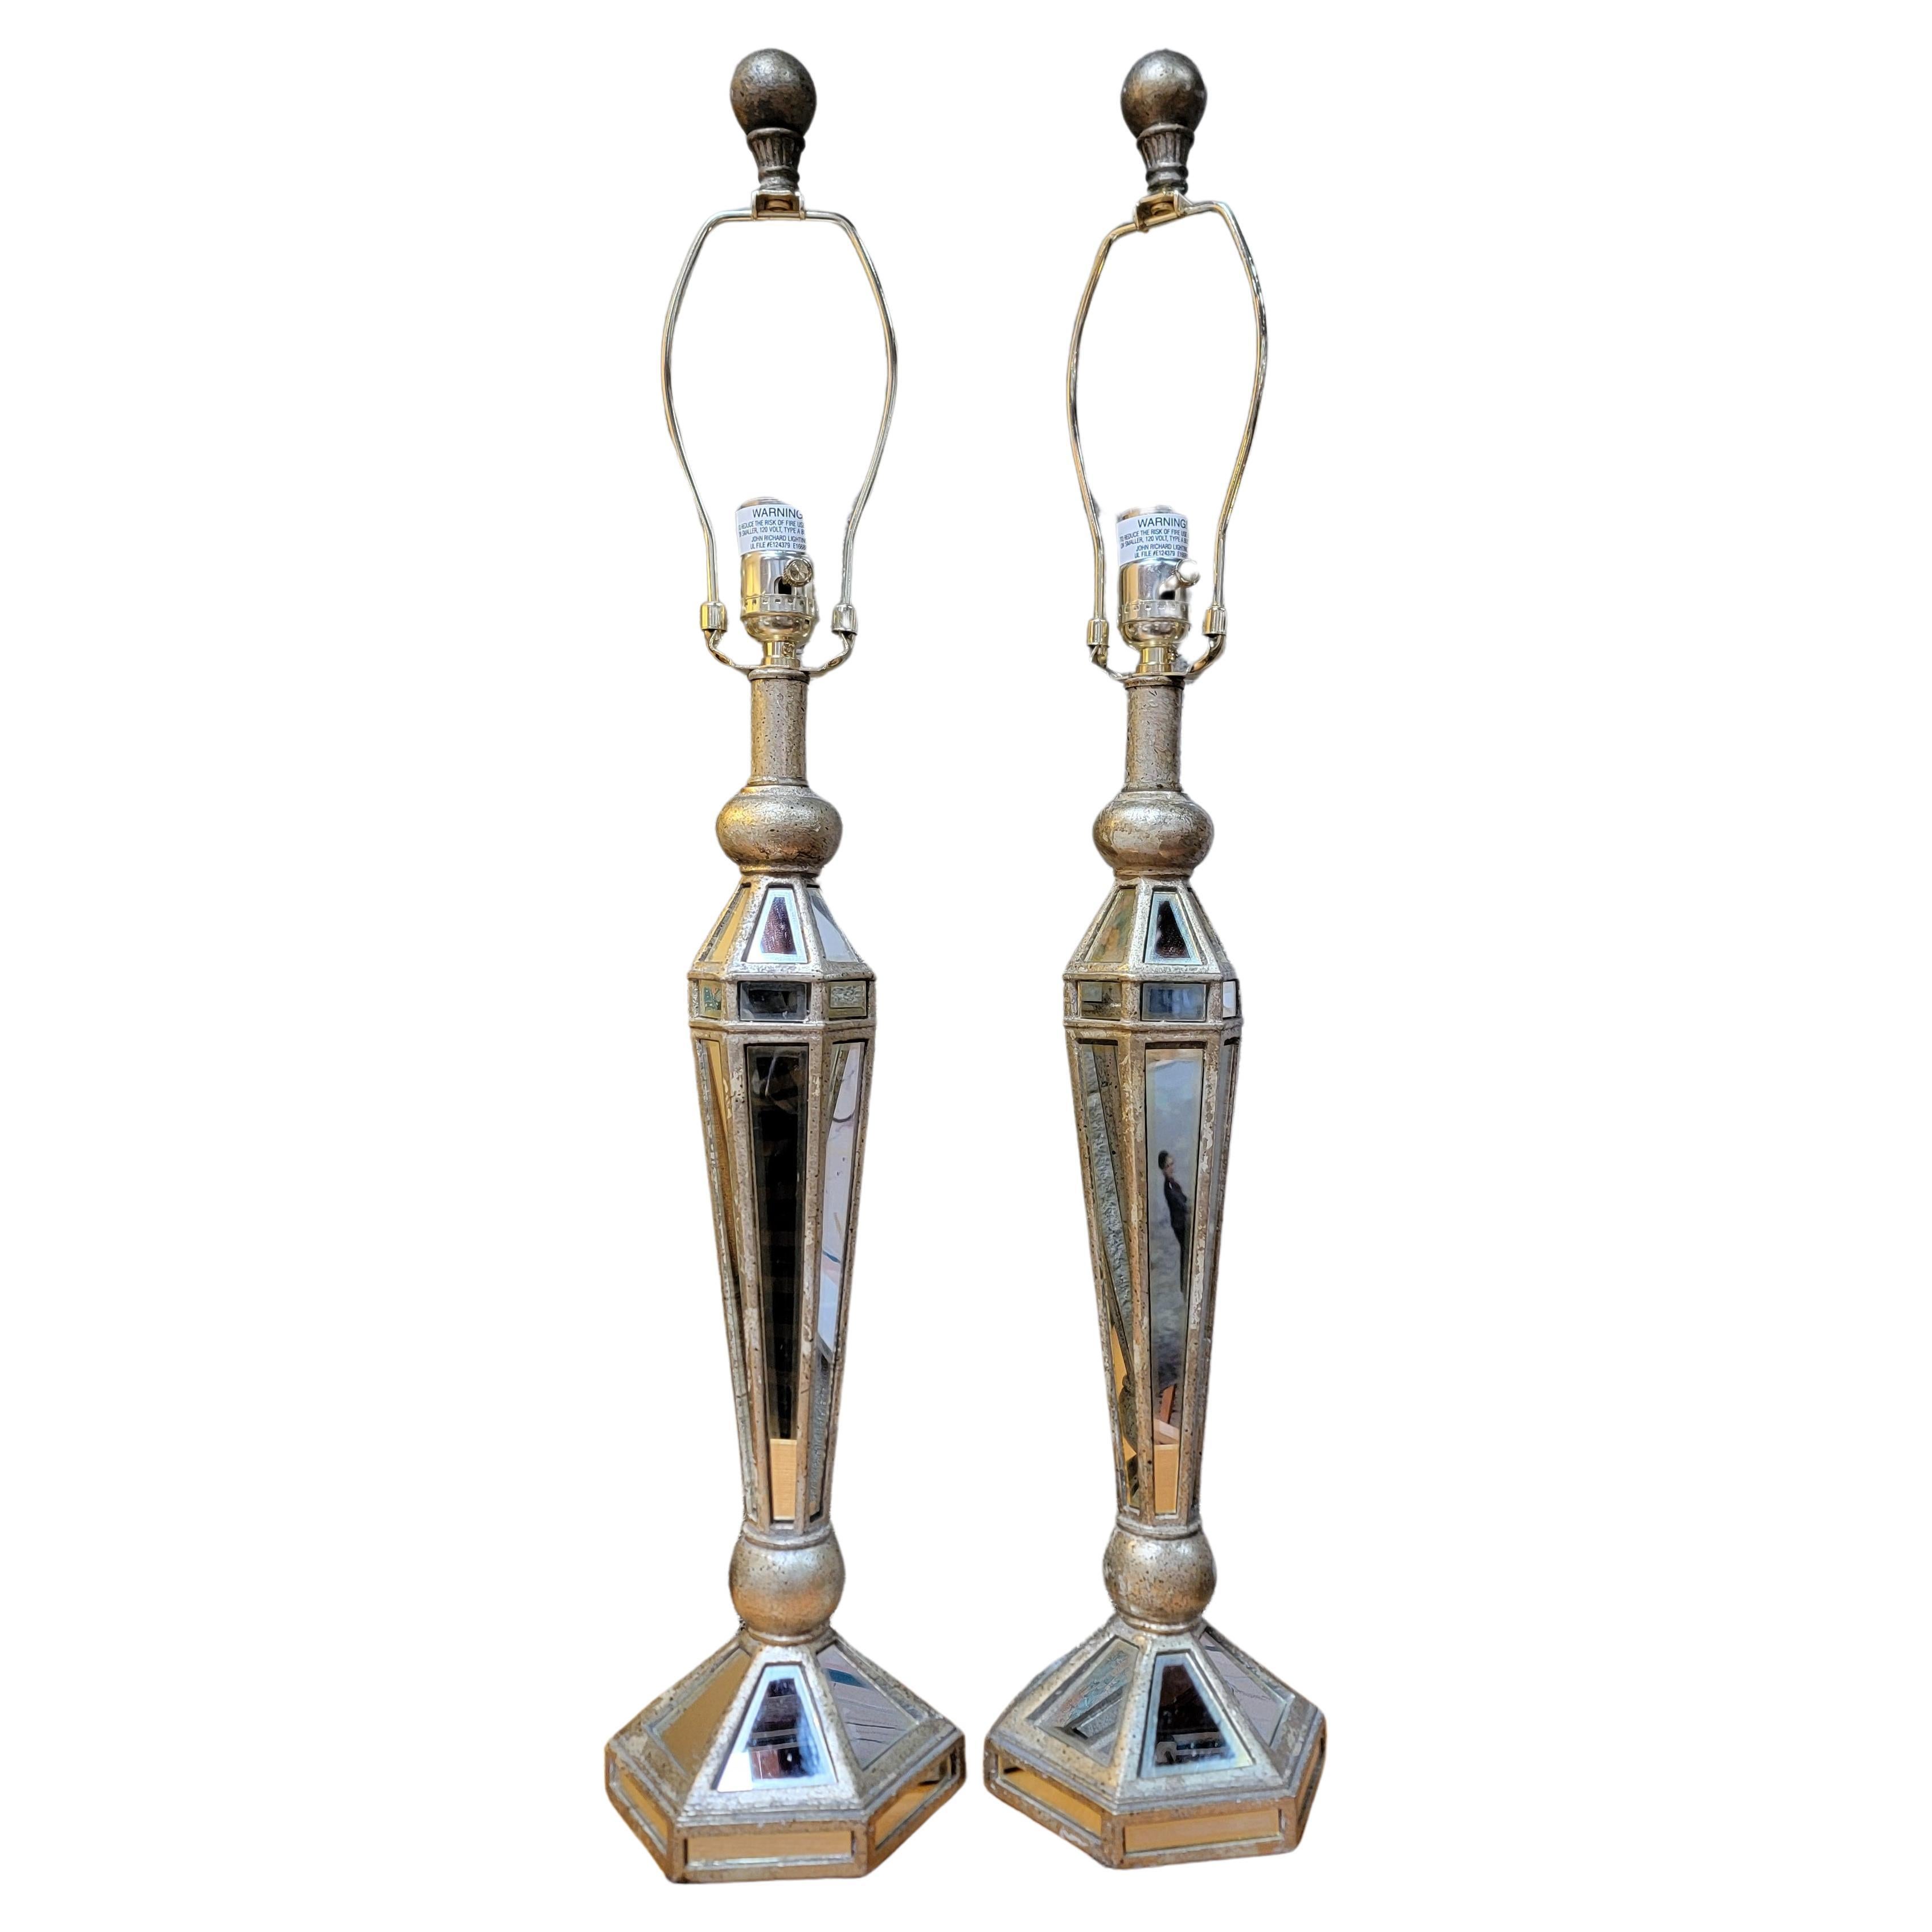 Mirrored Hollywood Regency Table Lamps by John Richard Lighting